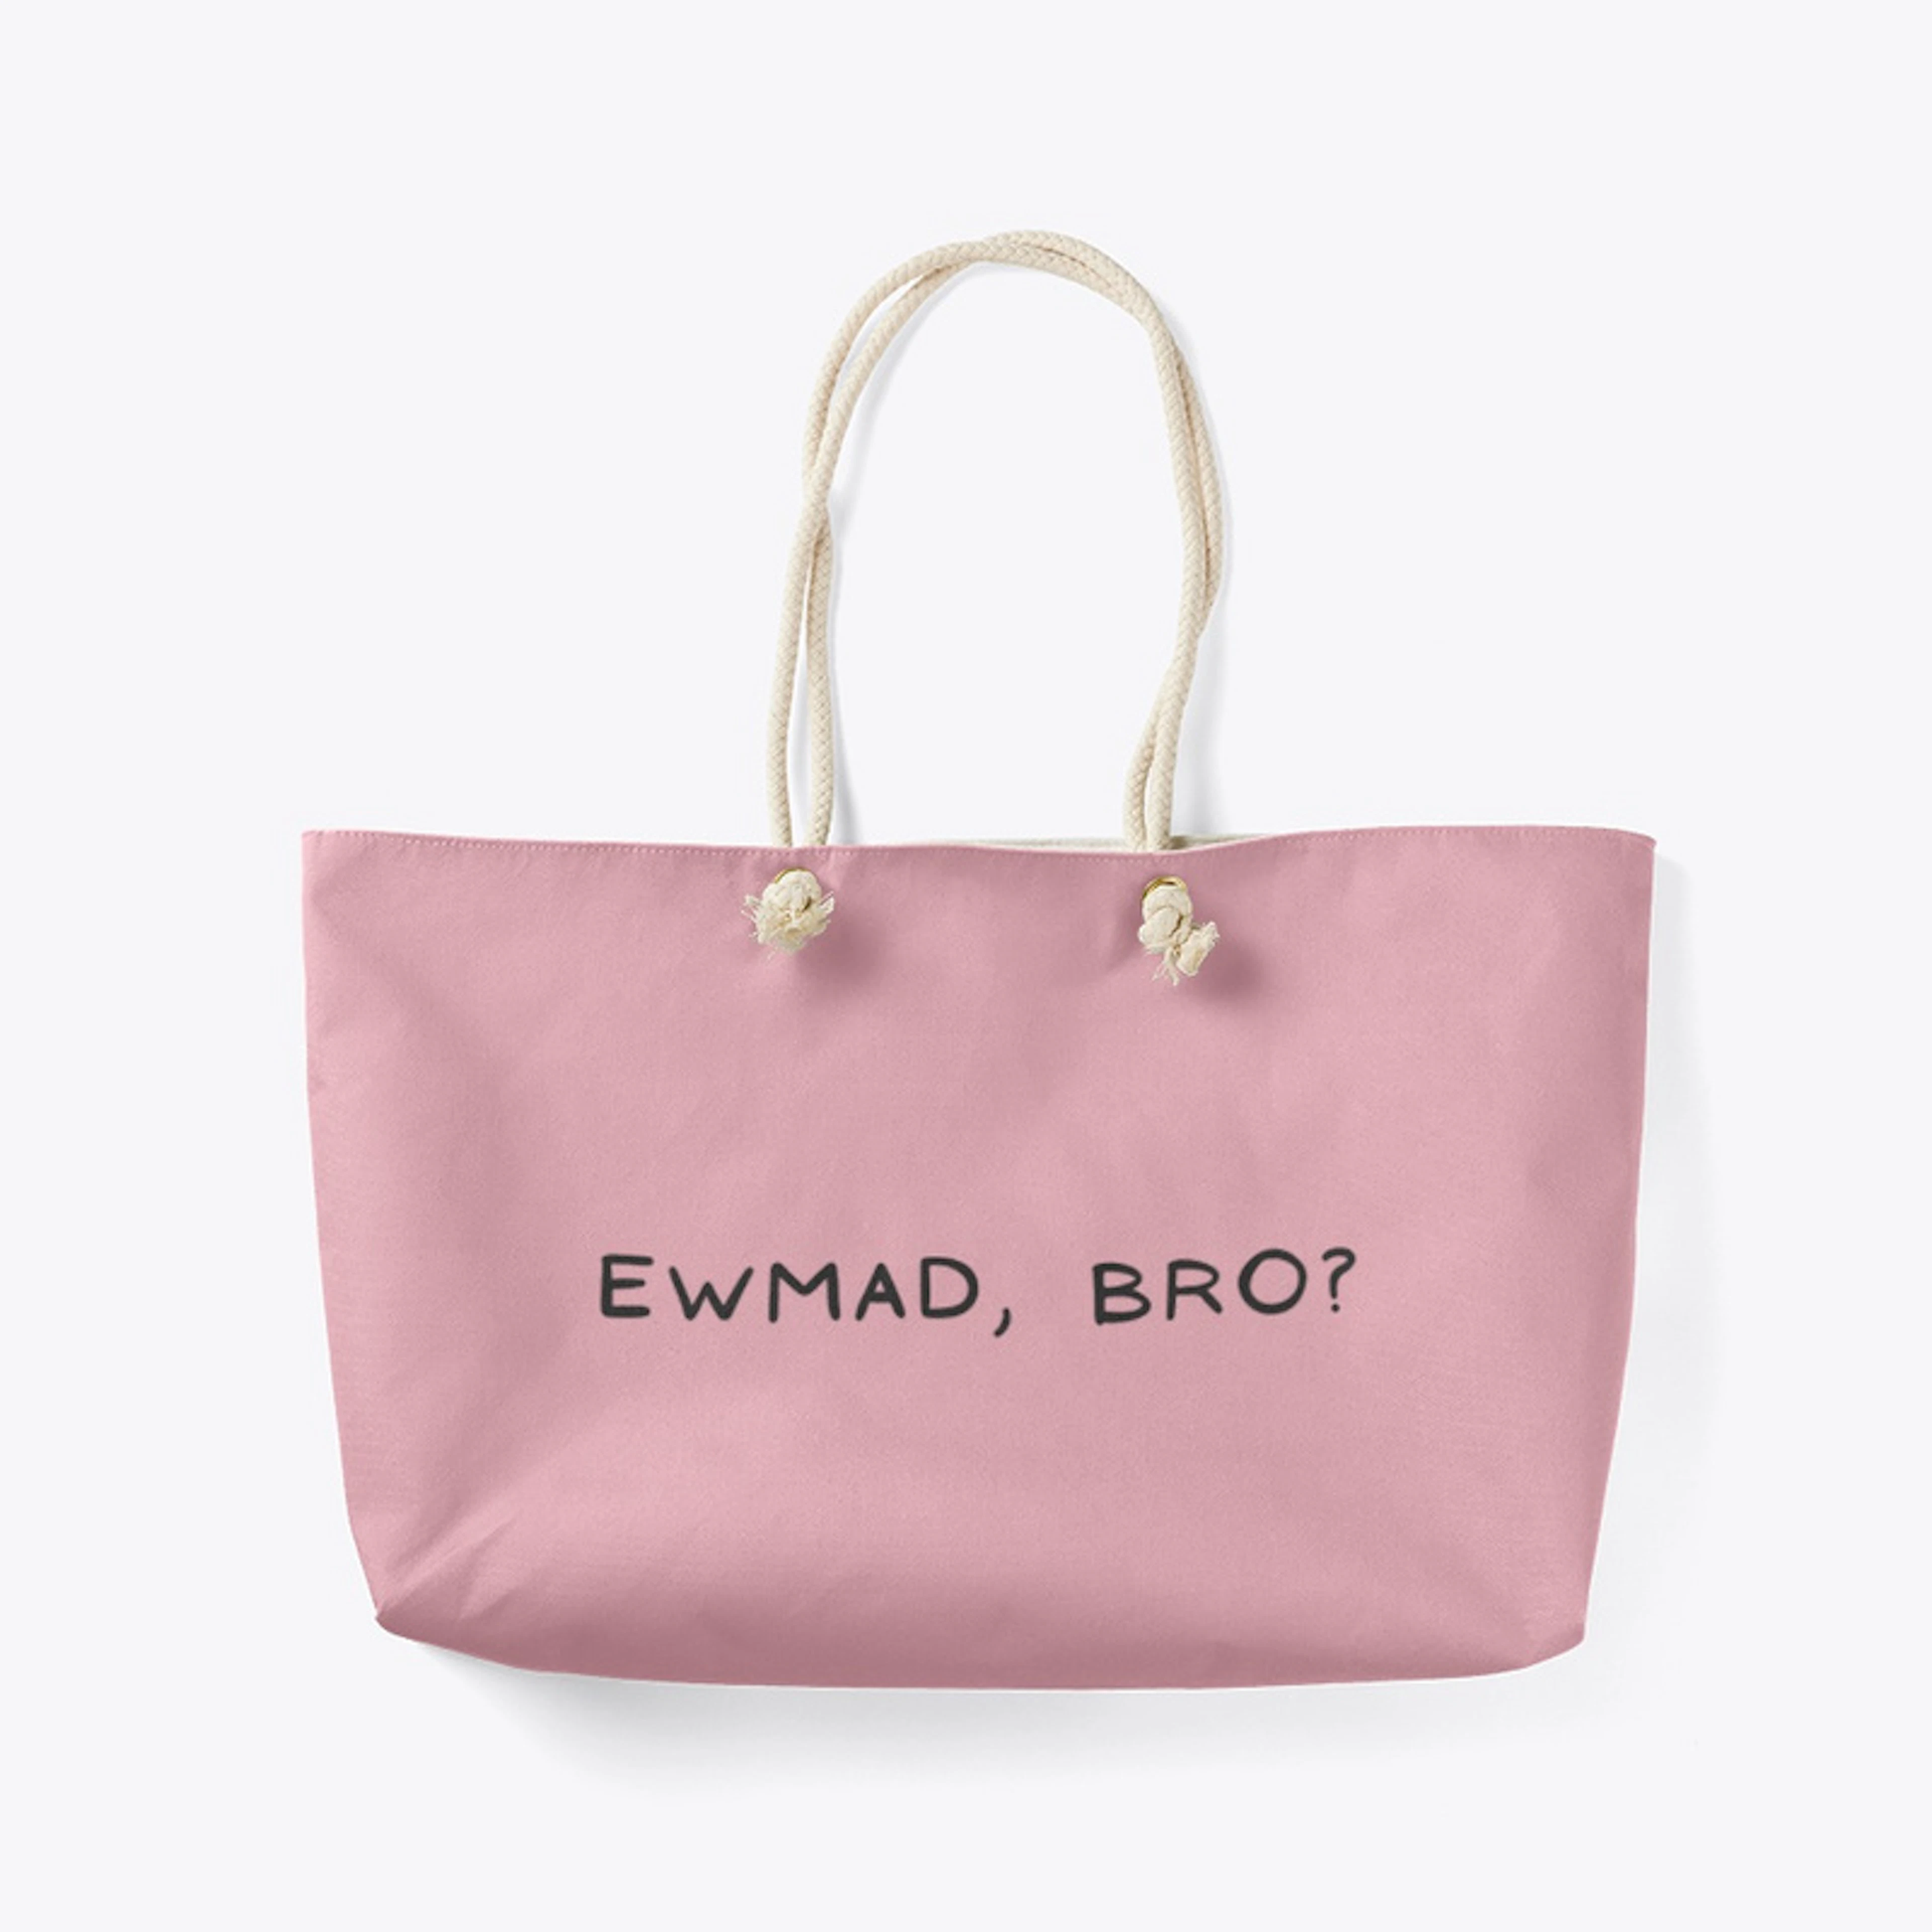 EWMAD, Bro?